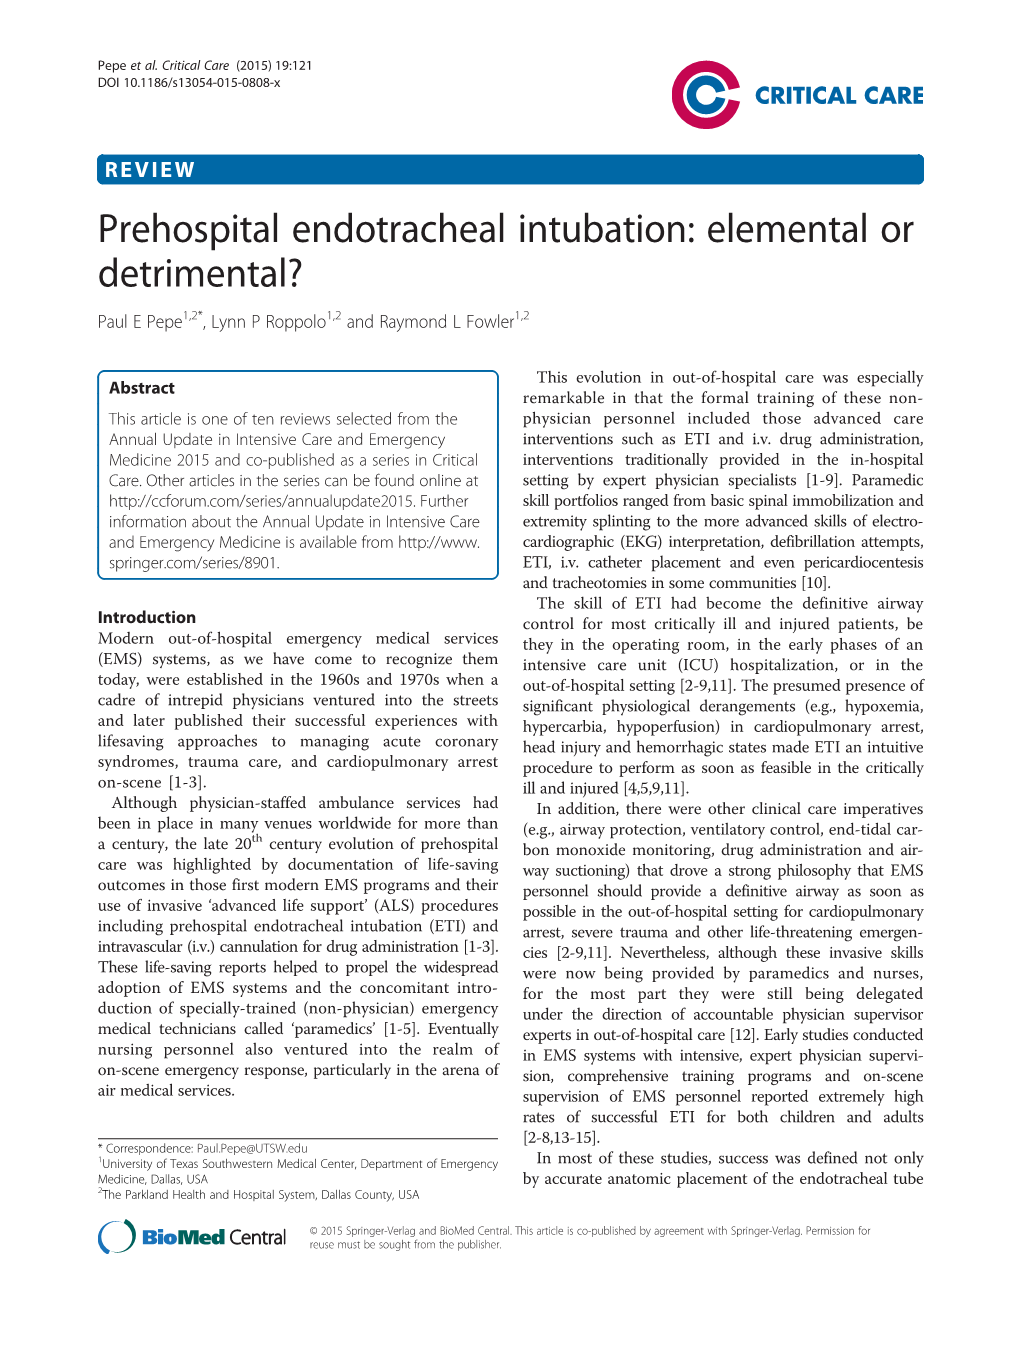 Prehospital Endotracheal Intubation: Elemental Or Detrimental? Paul E Pepe1,2*, Lynn P Roppolo1,2 and Raymond L Fowler1,2